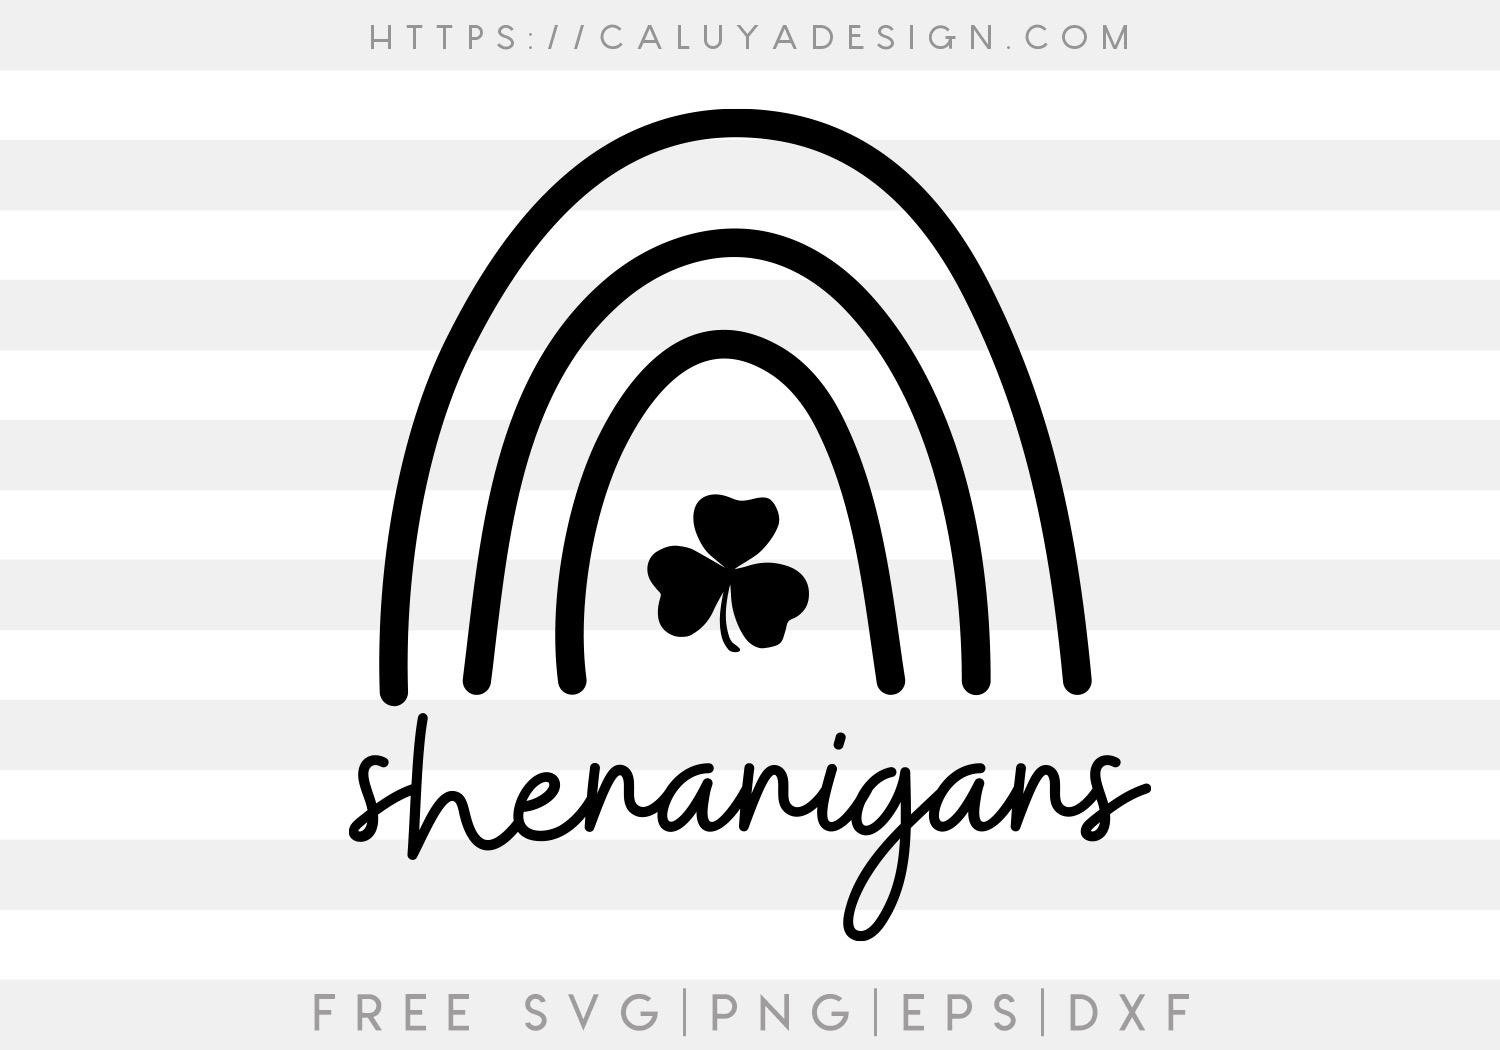 Free Shenanigans SVG Cut File